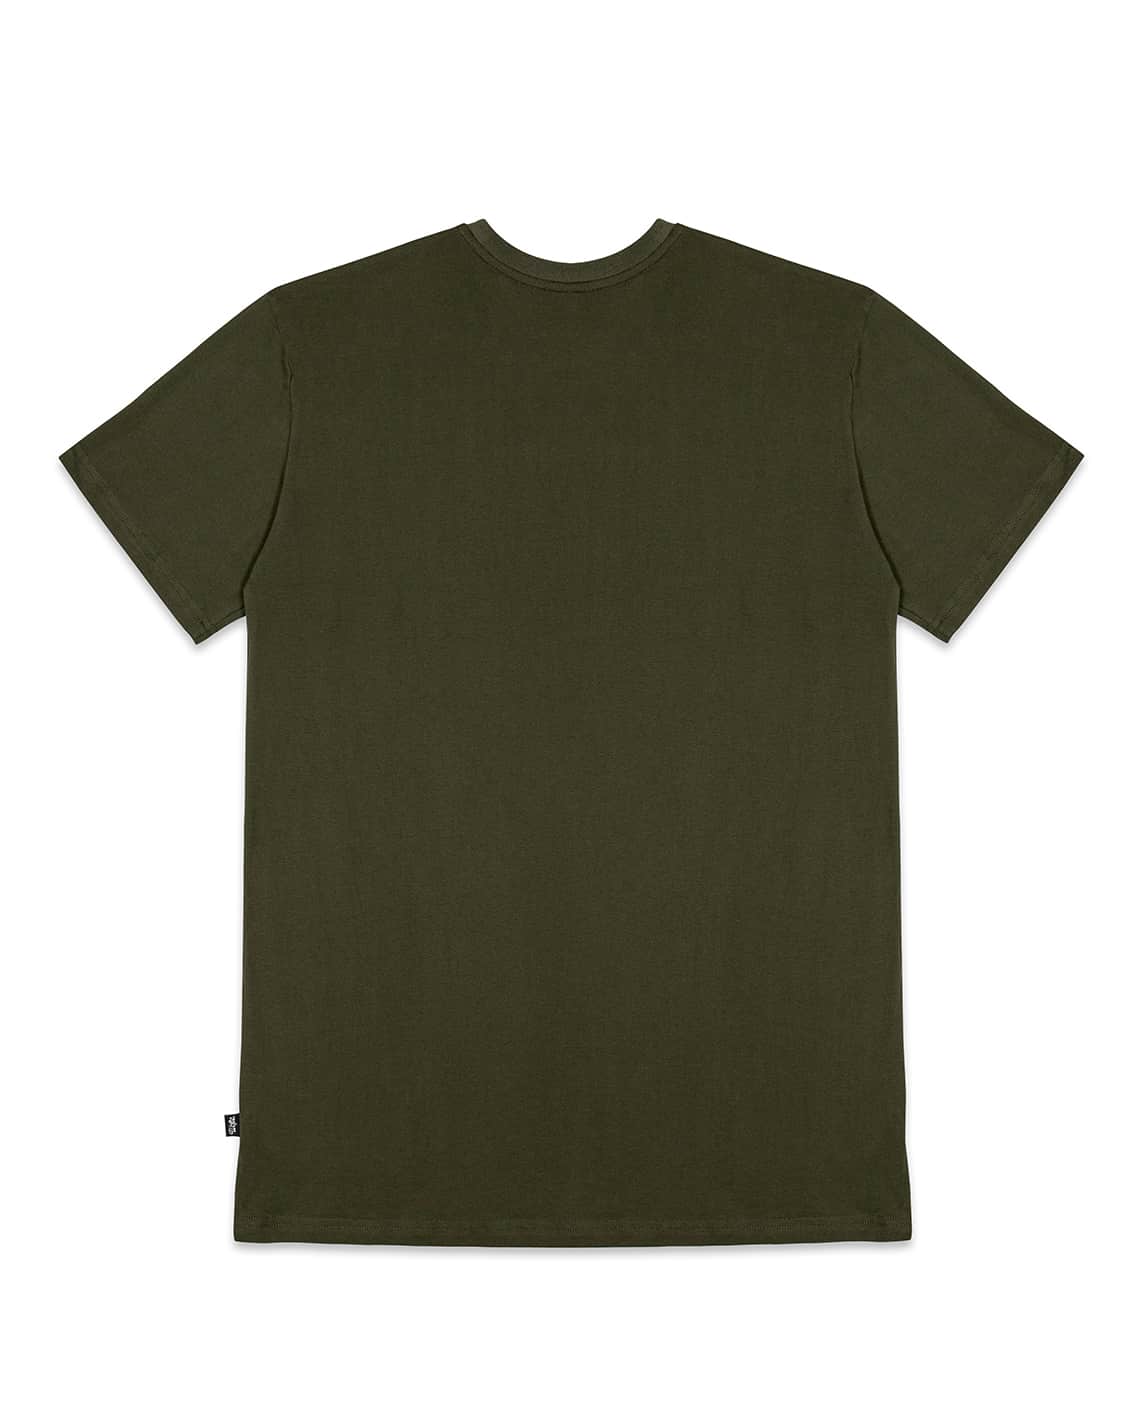 Carp Fishing Clothing - Hoodie & T Shirt Combination - Olive Green